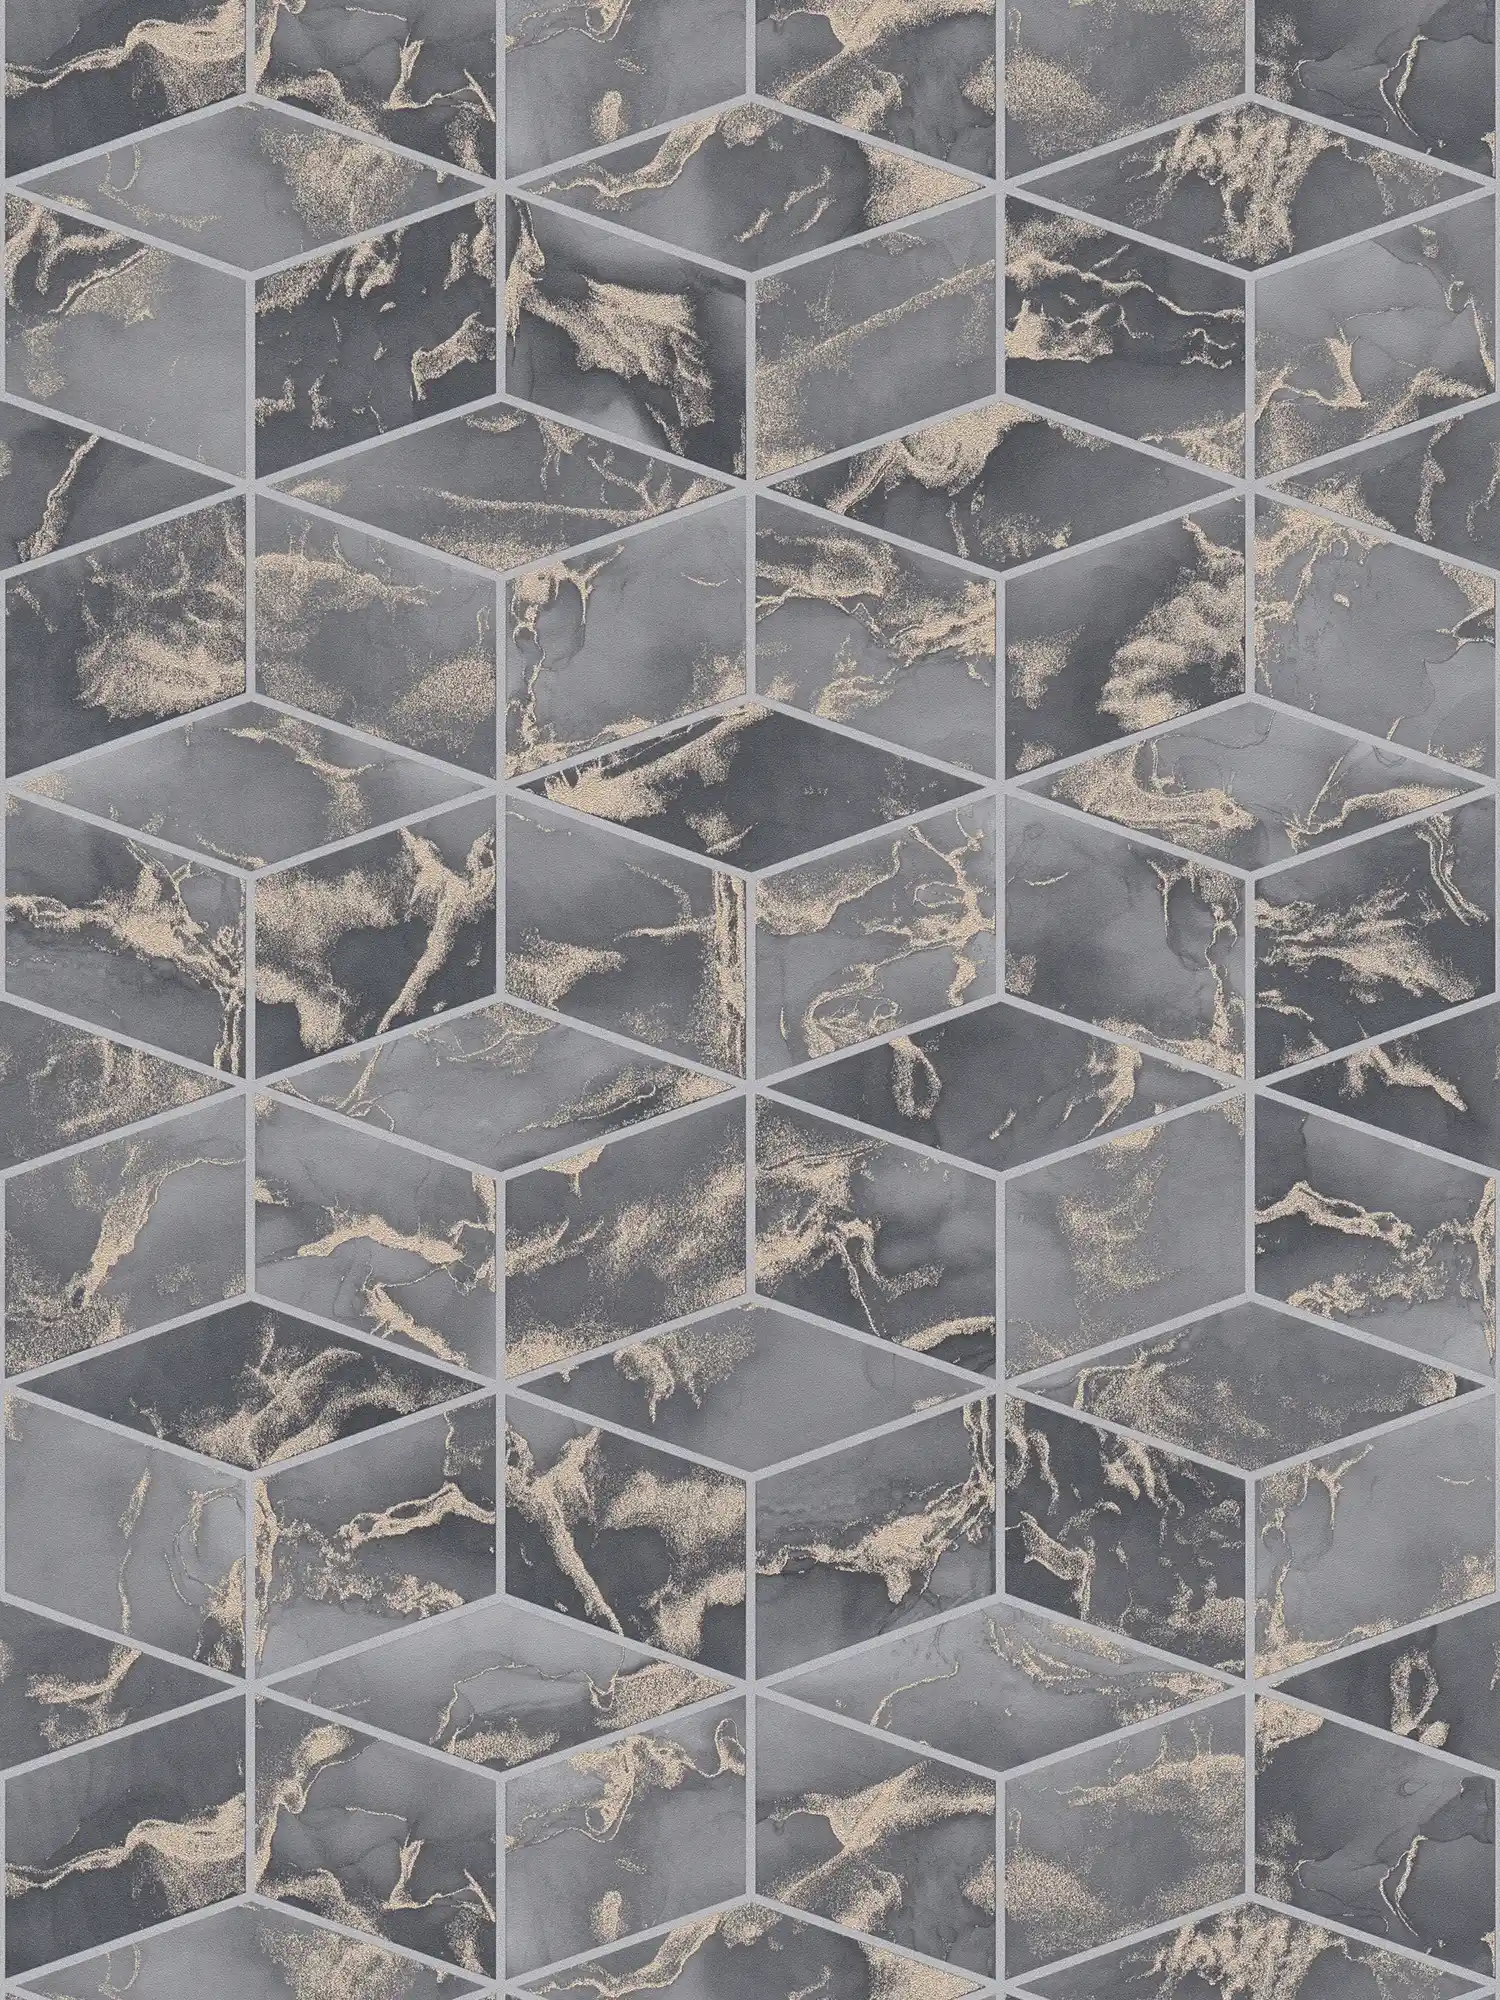             Wallpaper tile look with gold marbling - beige, grey, metallic
        